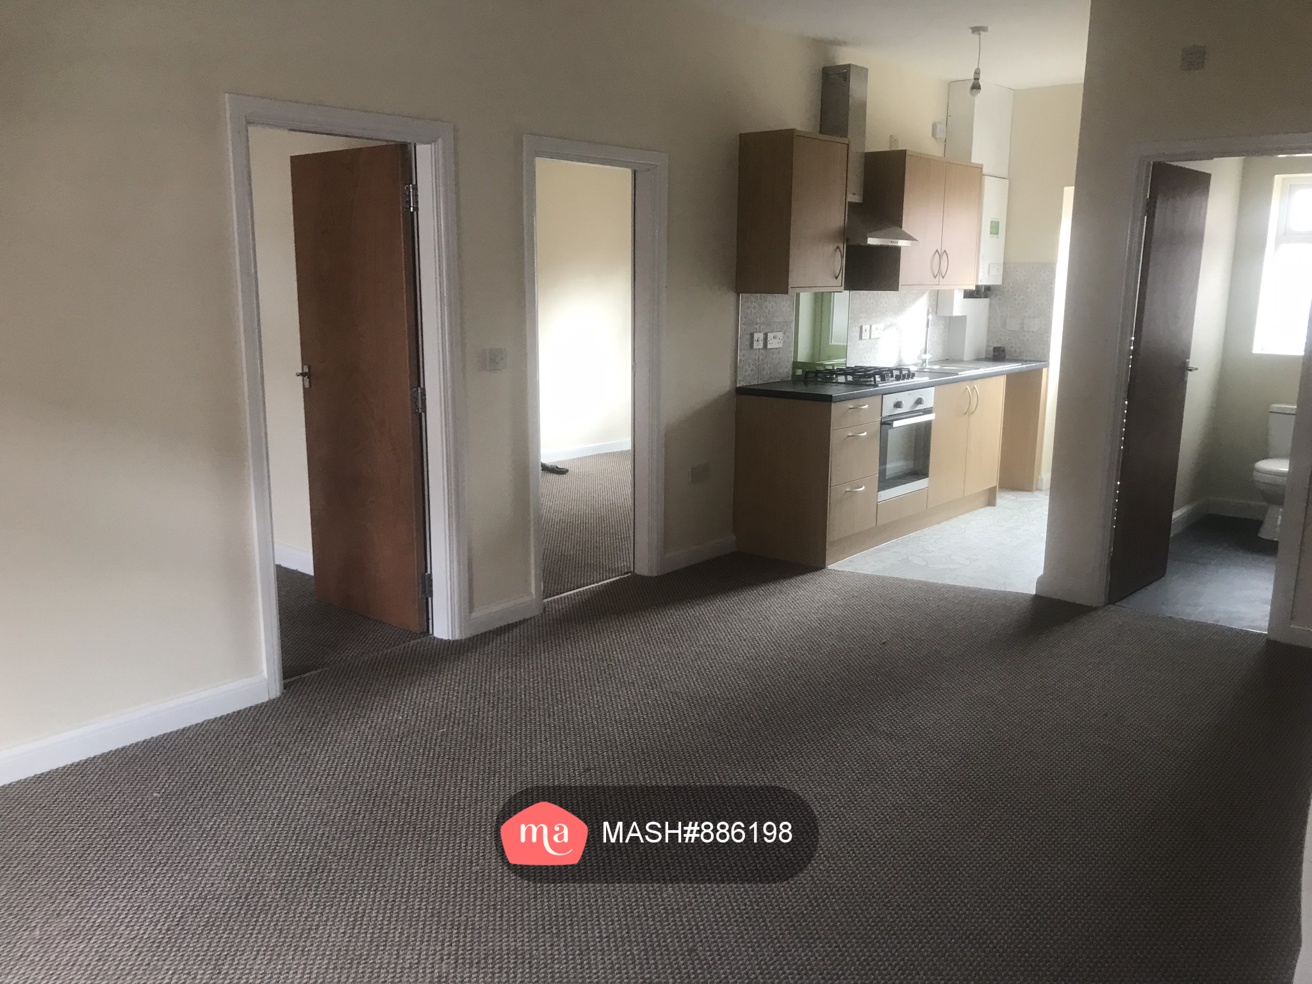 2 Bedroom Flat to rent in Derby - Mashroom